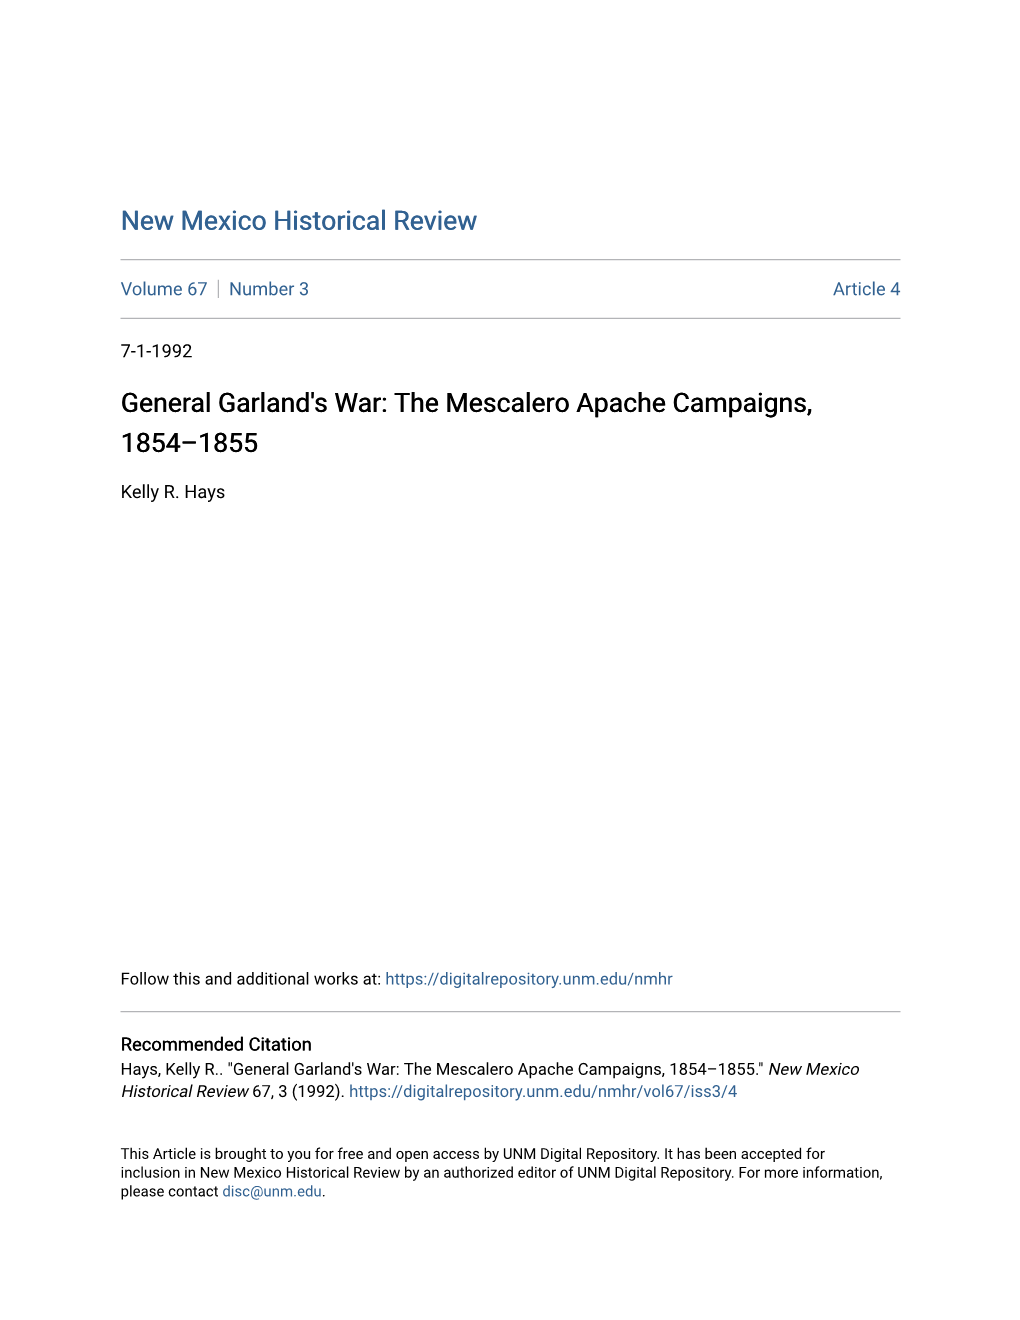 General Garland's War: the Mescalero Apache Campaigns, 1854–1855